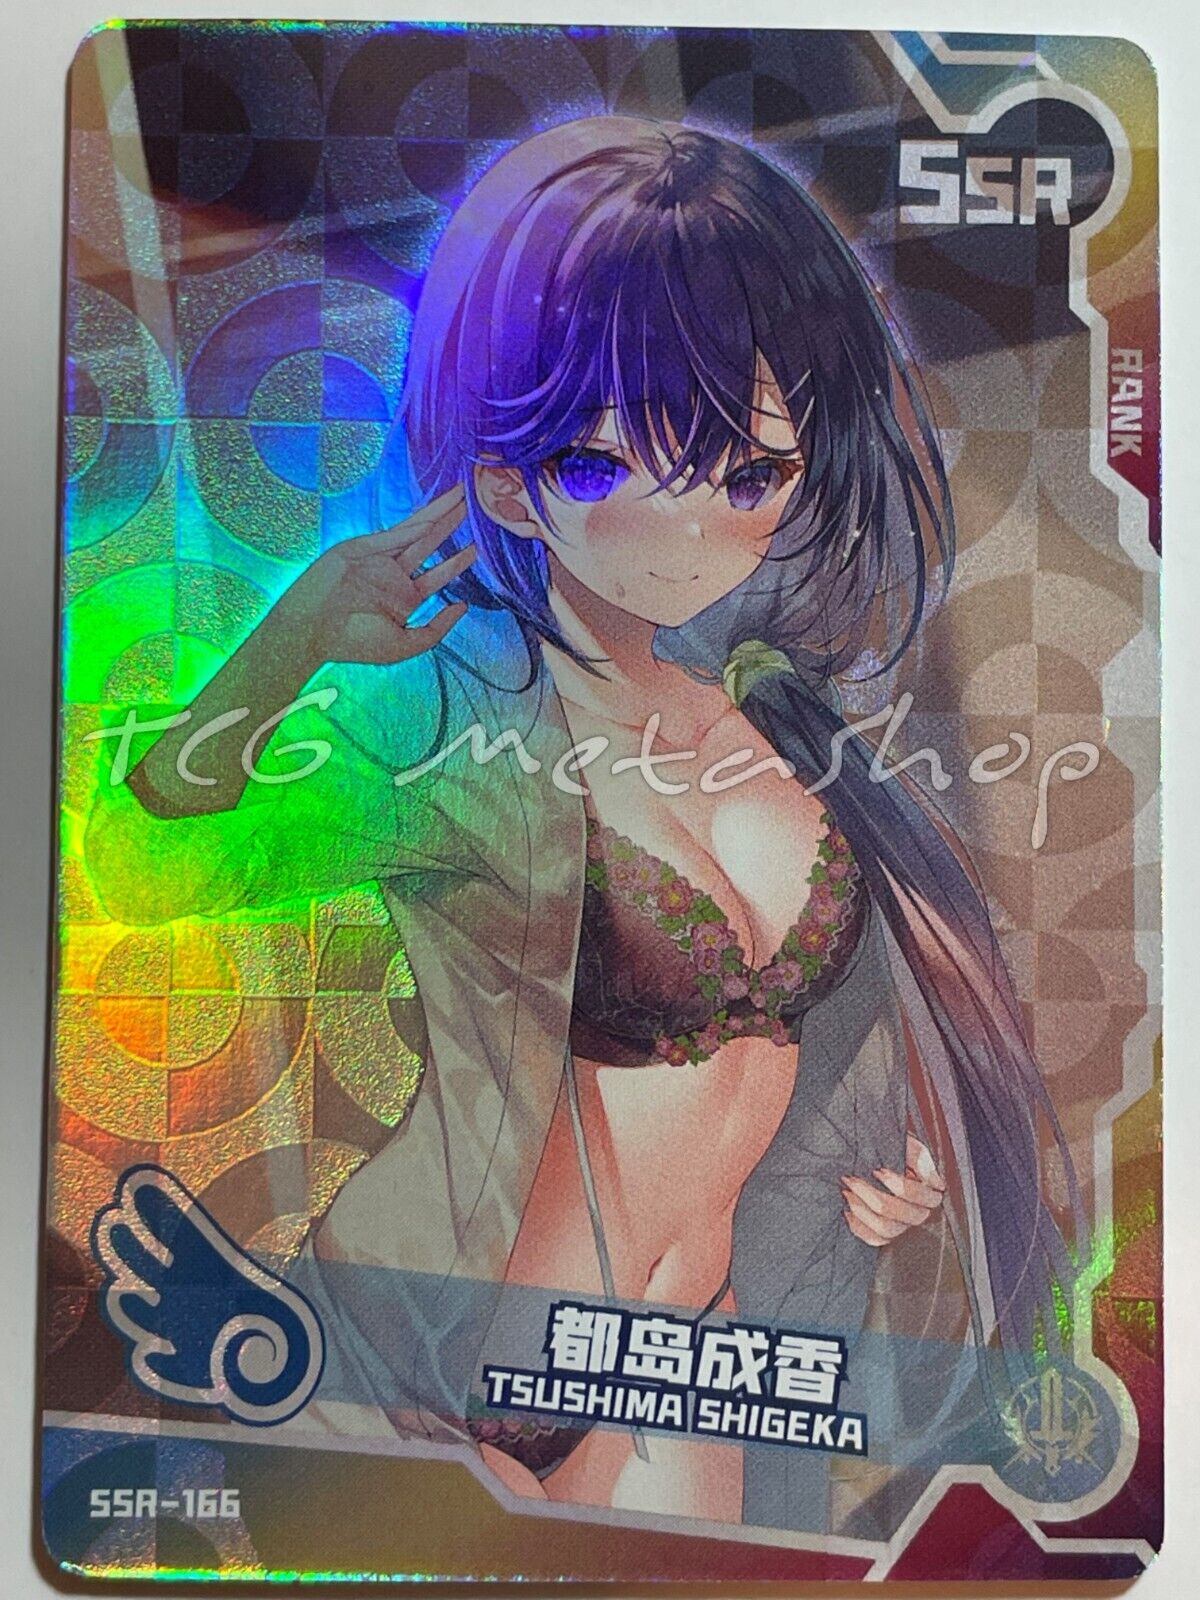 🔥 Maiden / Girl Party - Goddess Story [SSR]- Set 4 - Bikini Anime Cards 🔥